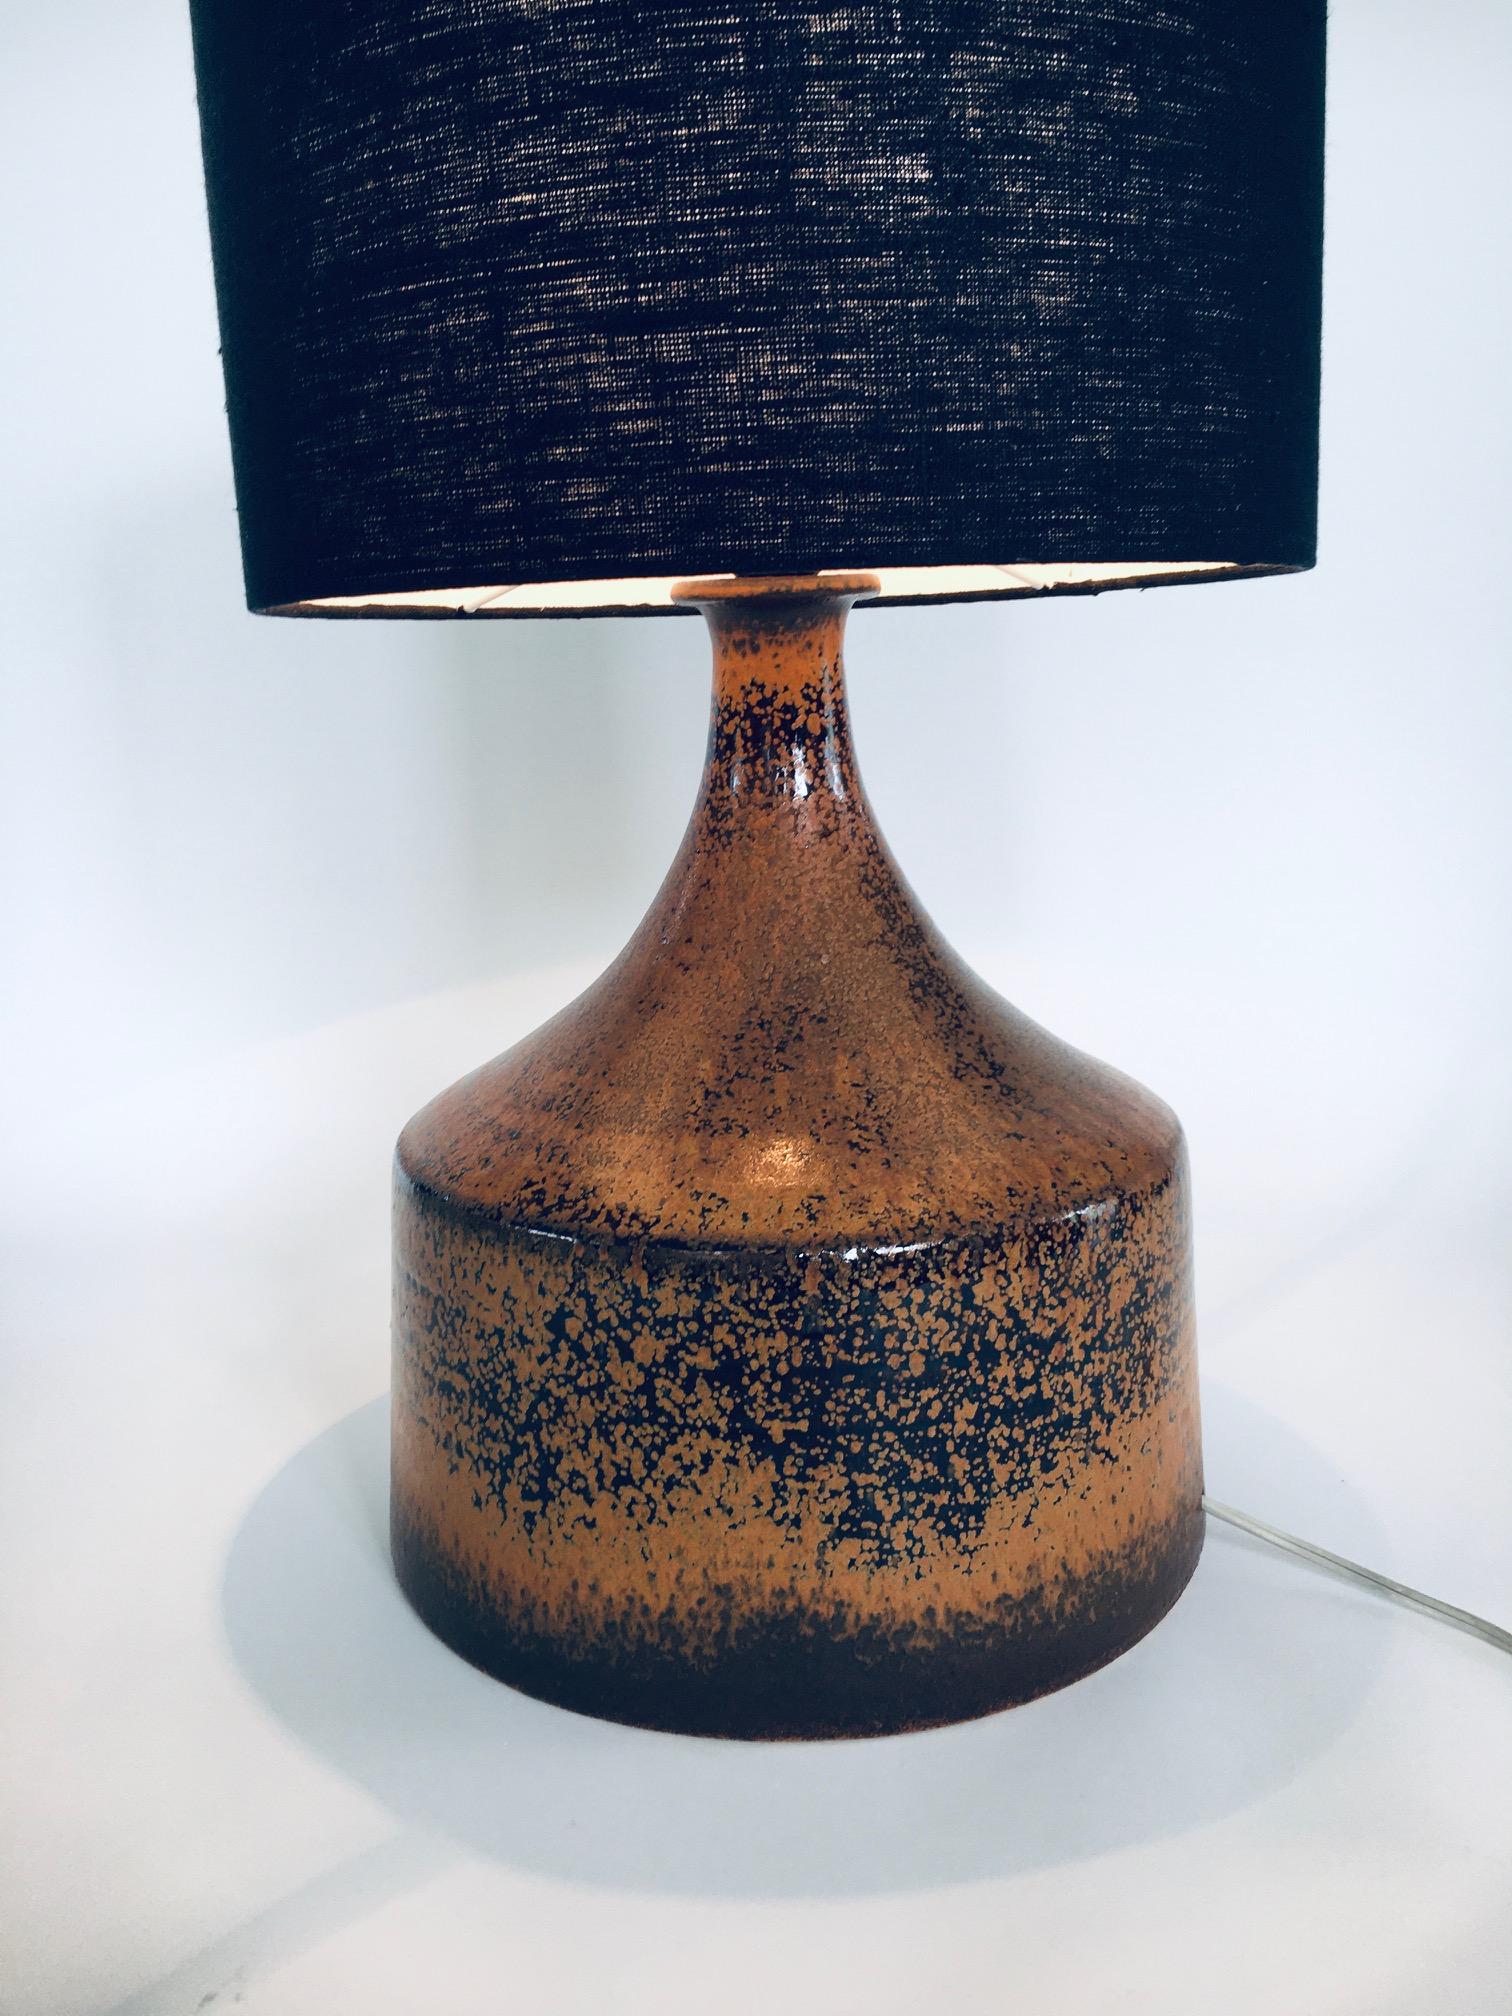 Midcentury Scandinavian Design Ceramic Table Lamp by Aypot, Sweden 1970's For Sale 8